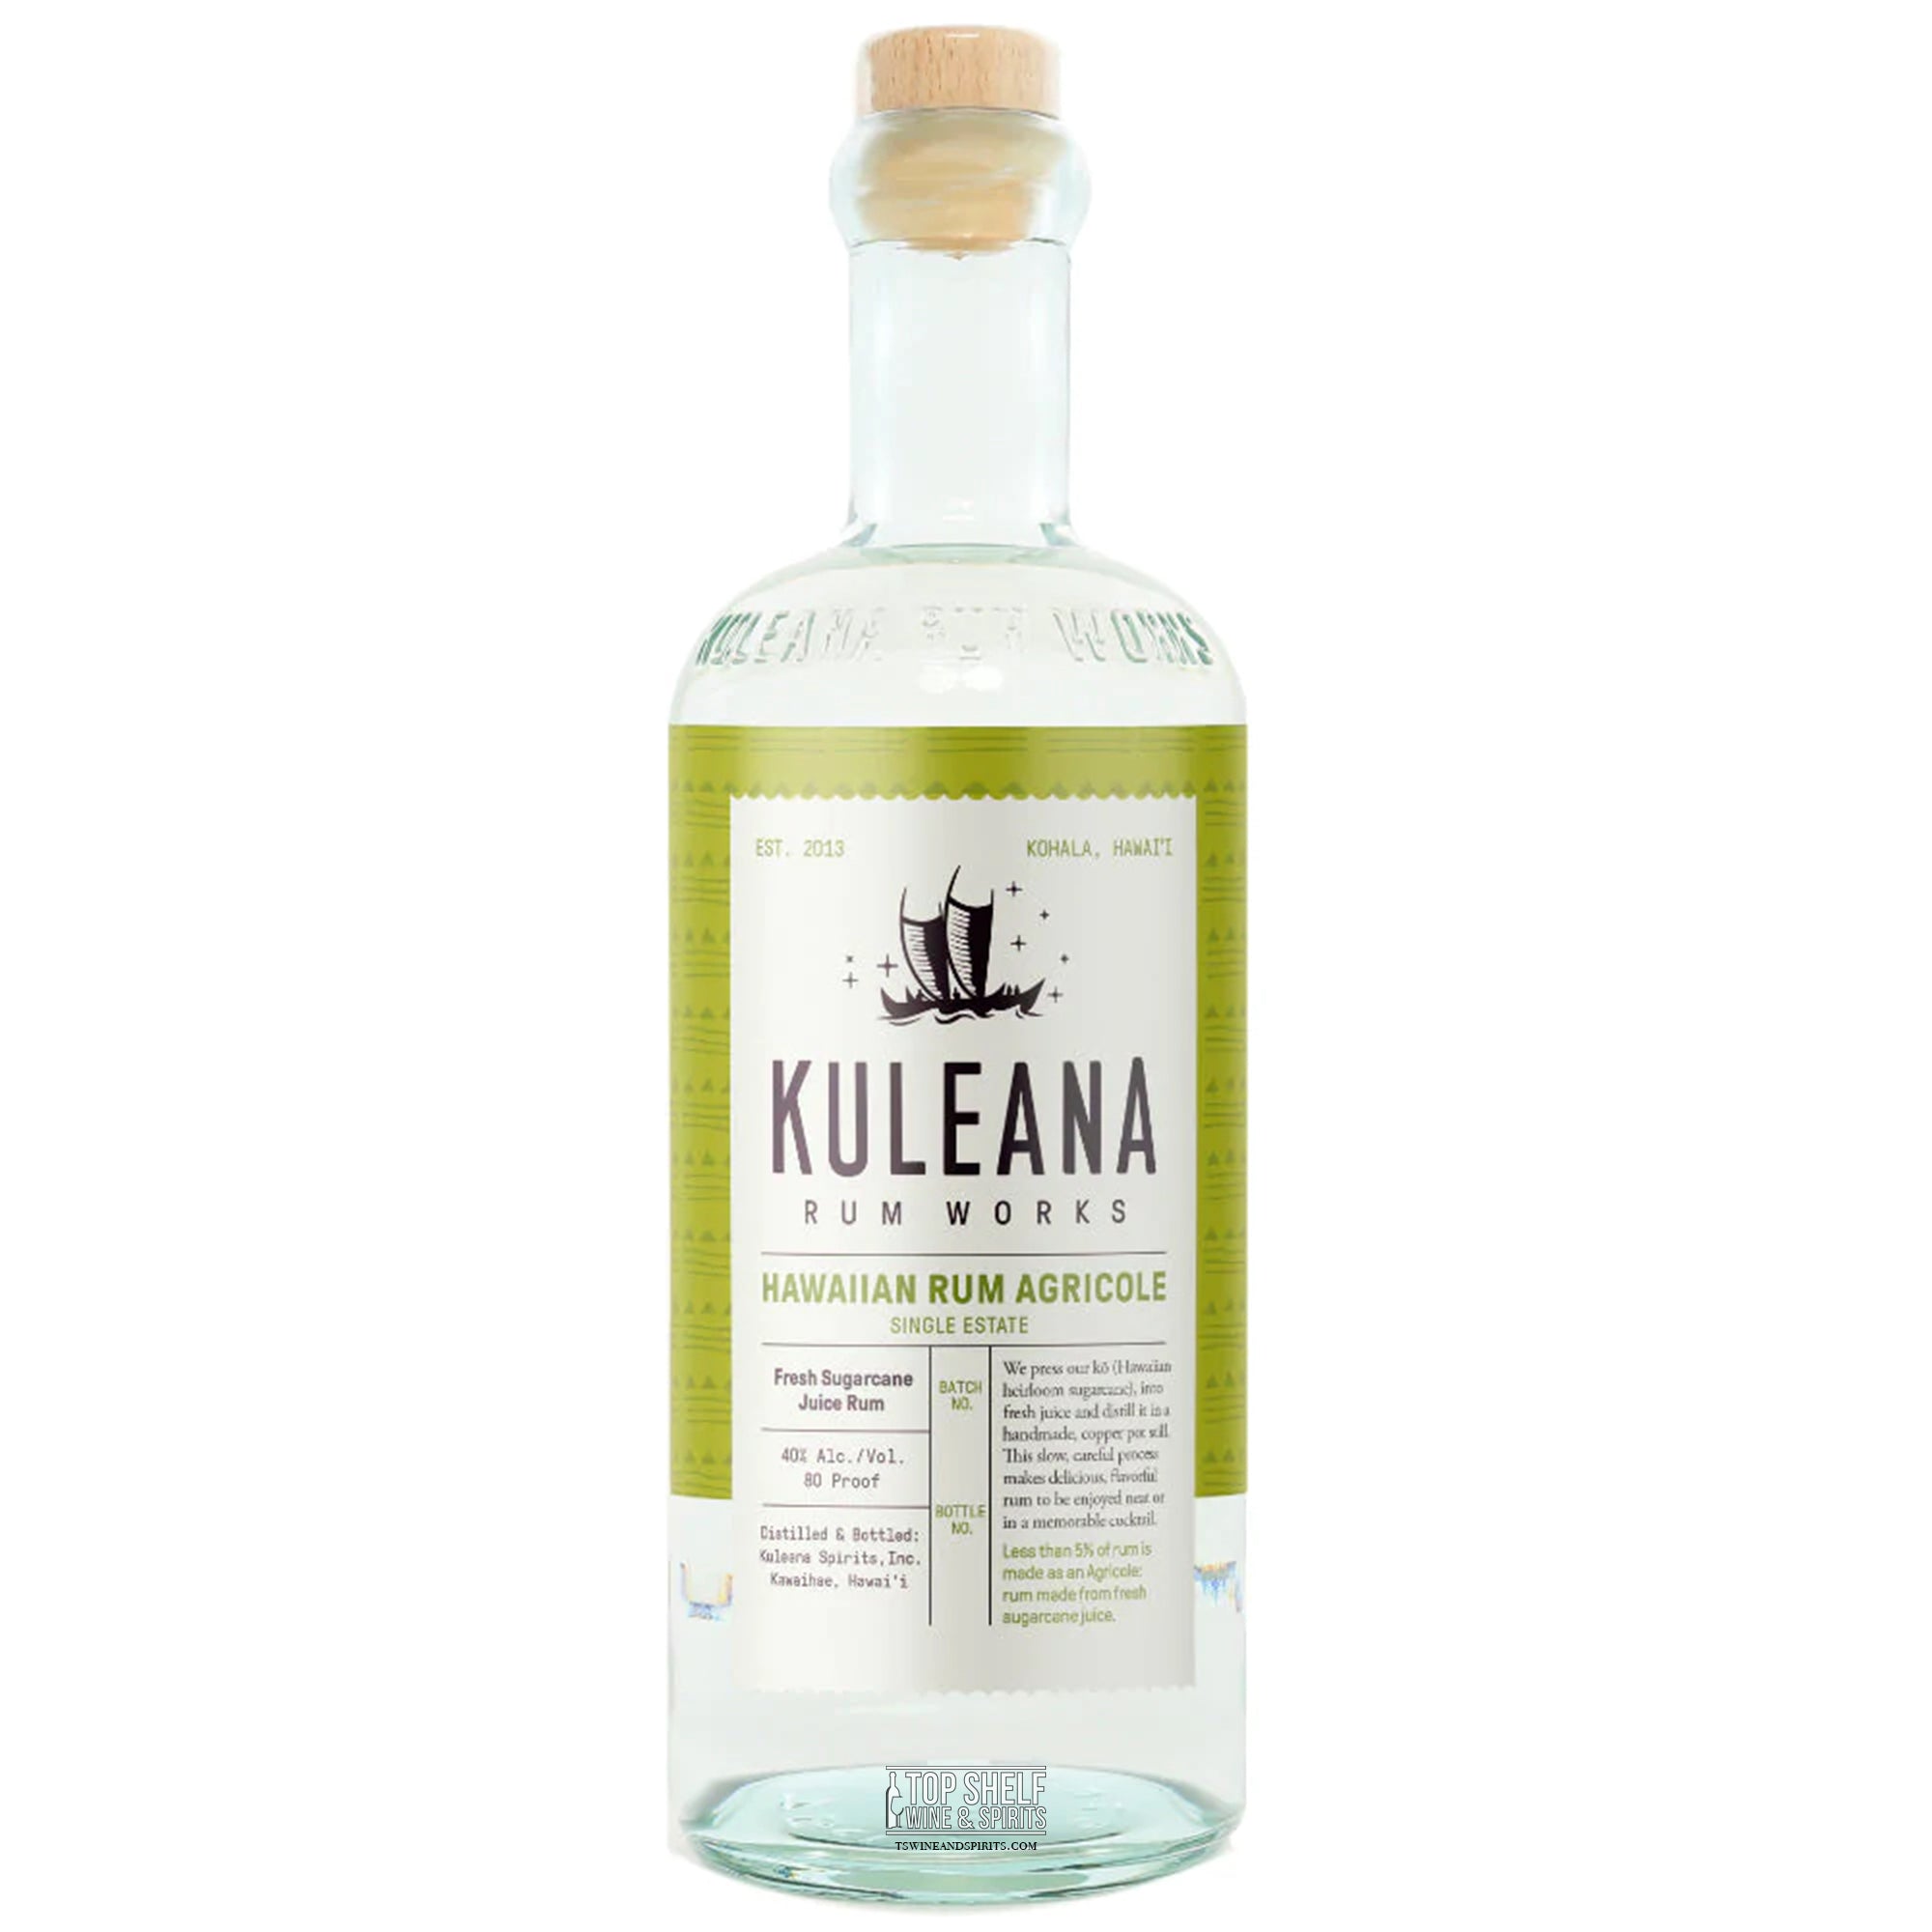 Kuleana Hawaiian Rum Agricole